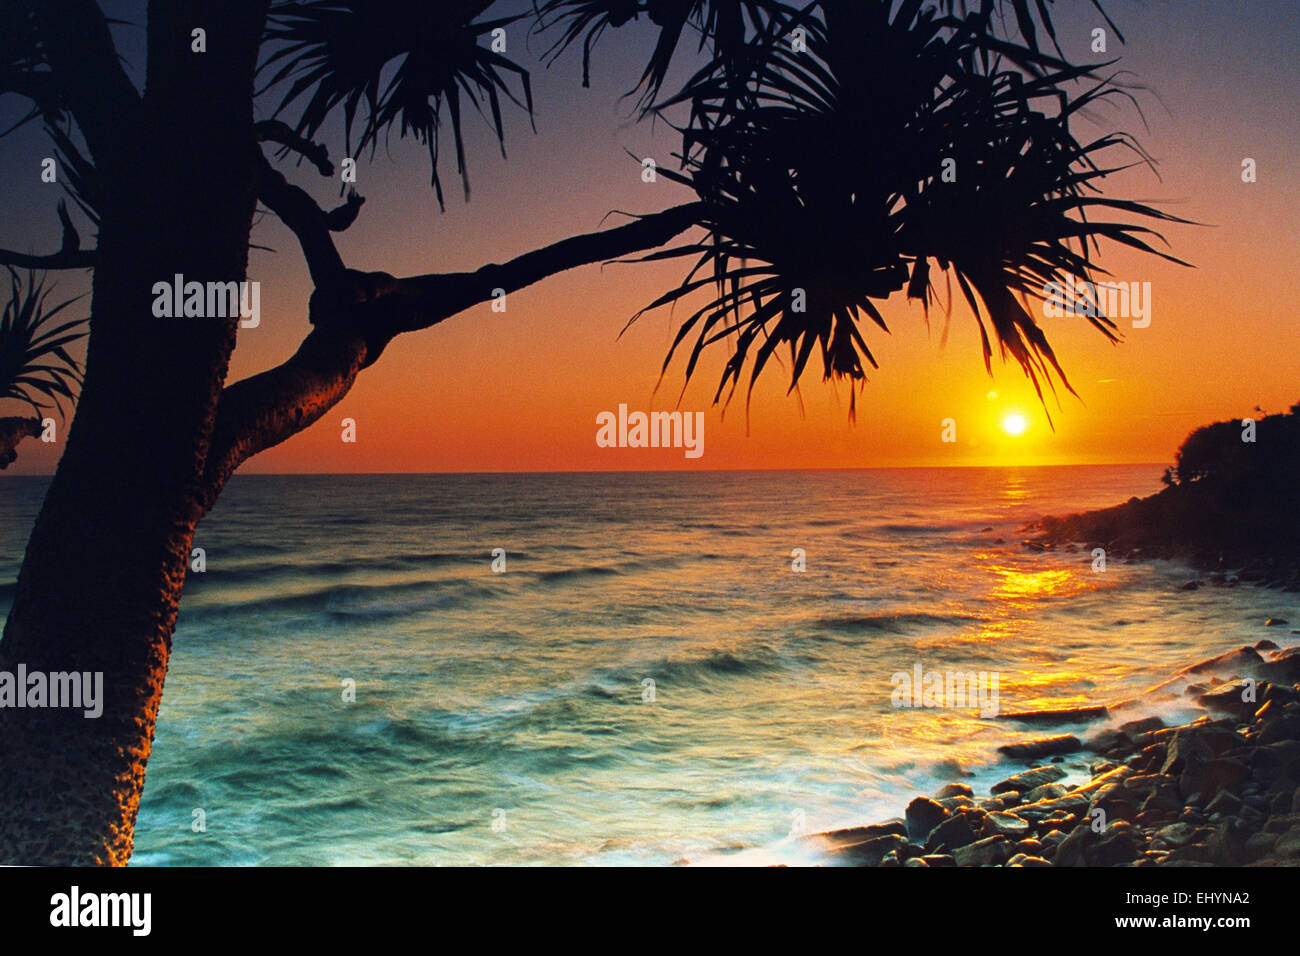 Silhouette of a Pandanus tree on beach at sunrise, Burleigh Heads, Gold Coast, Queensland, Australia Stock Photo